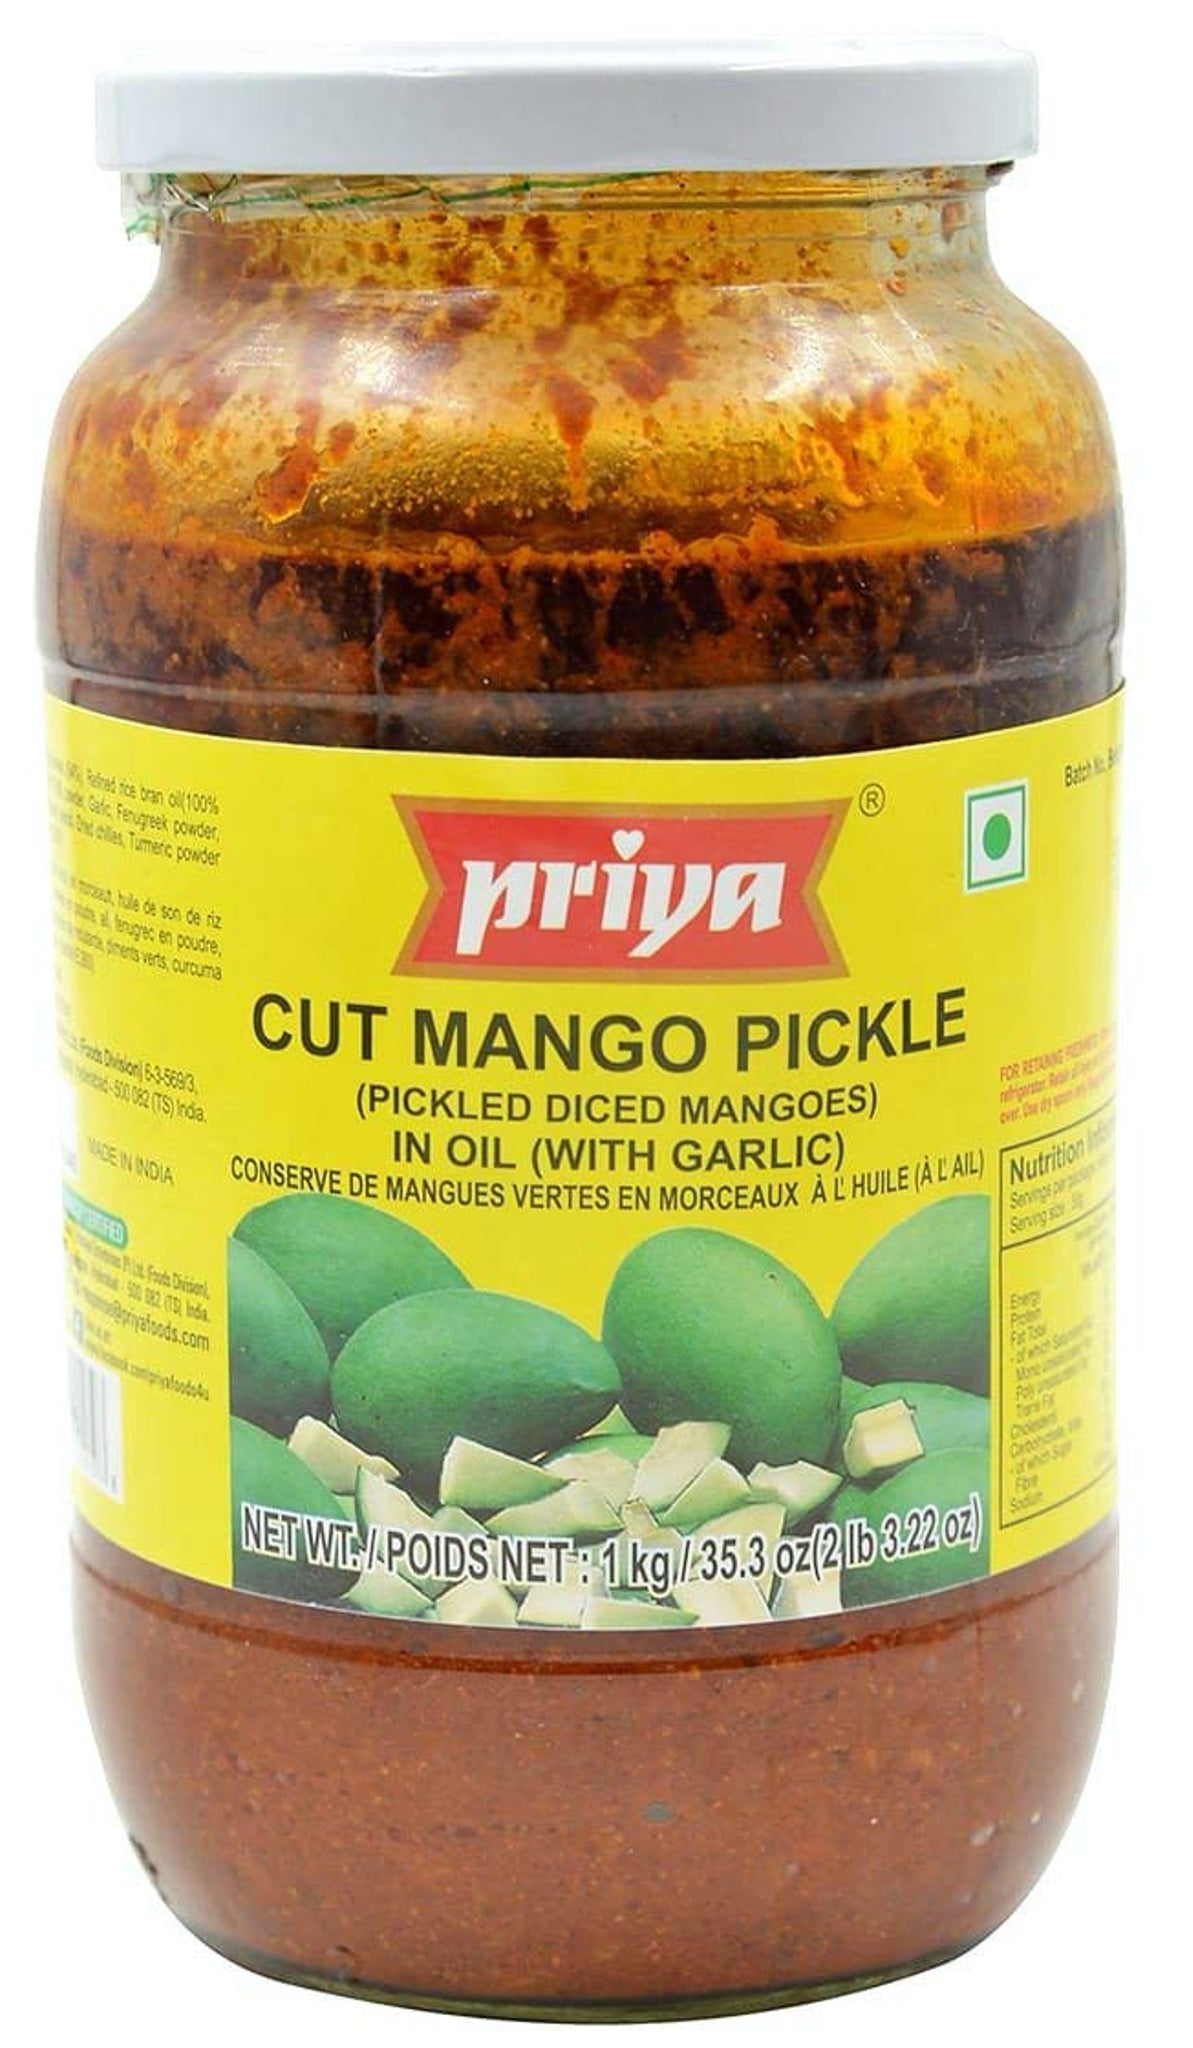 Cut Mango Pickle in Oil w/ Garlic